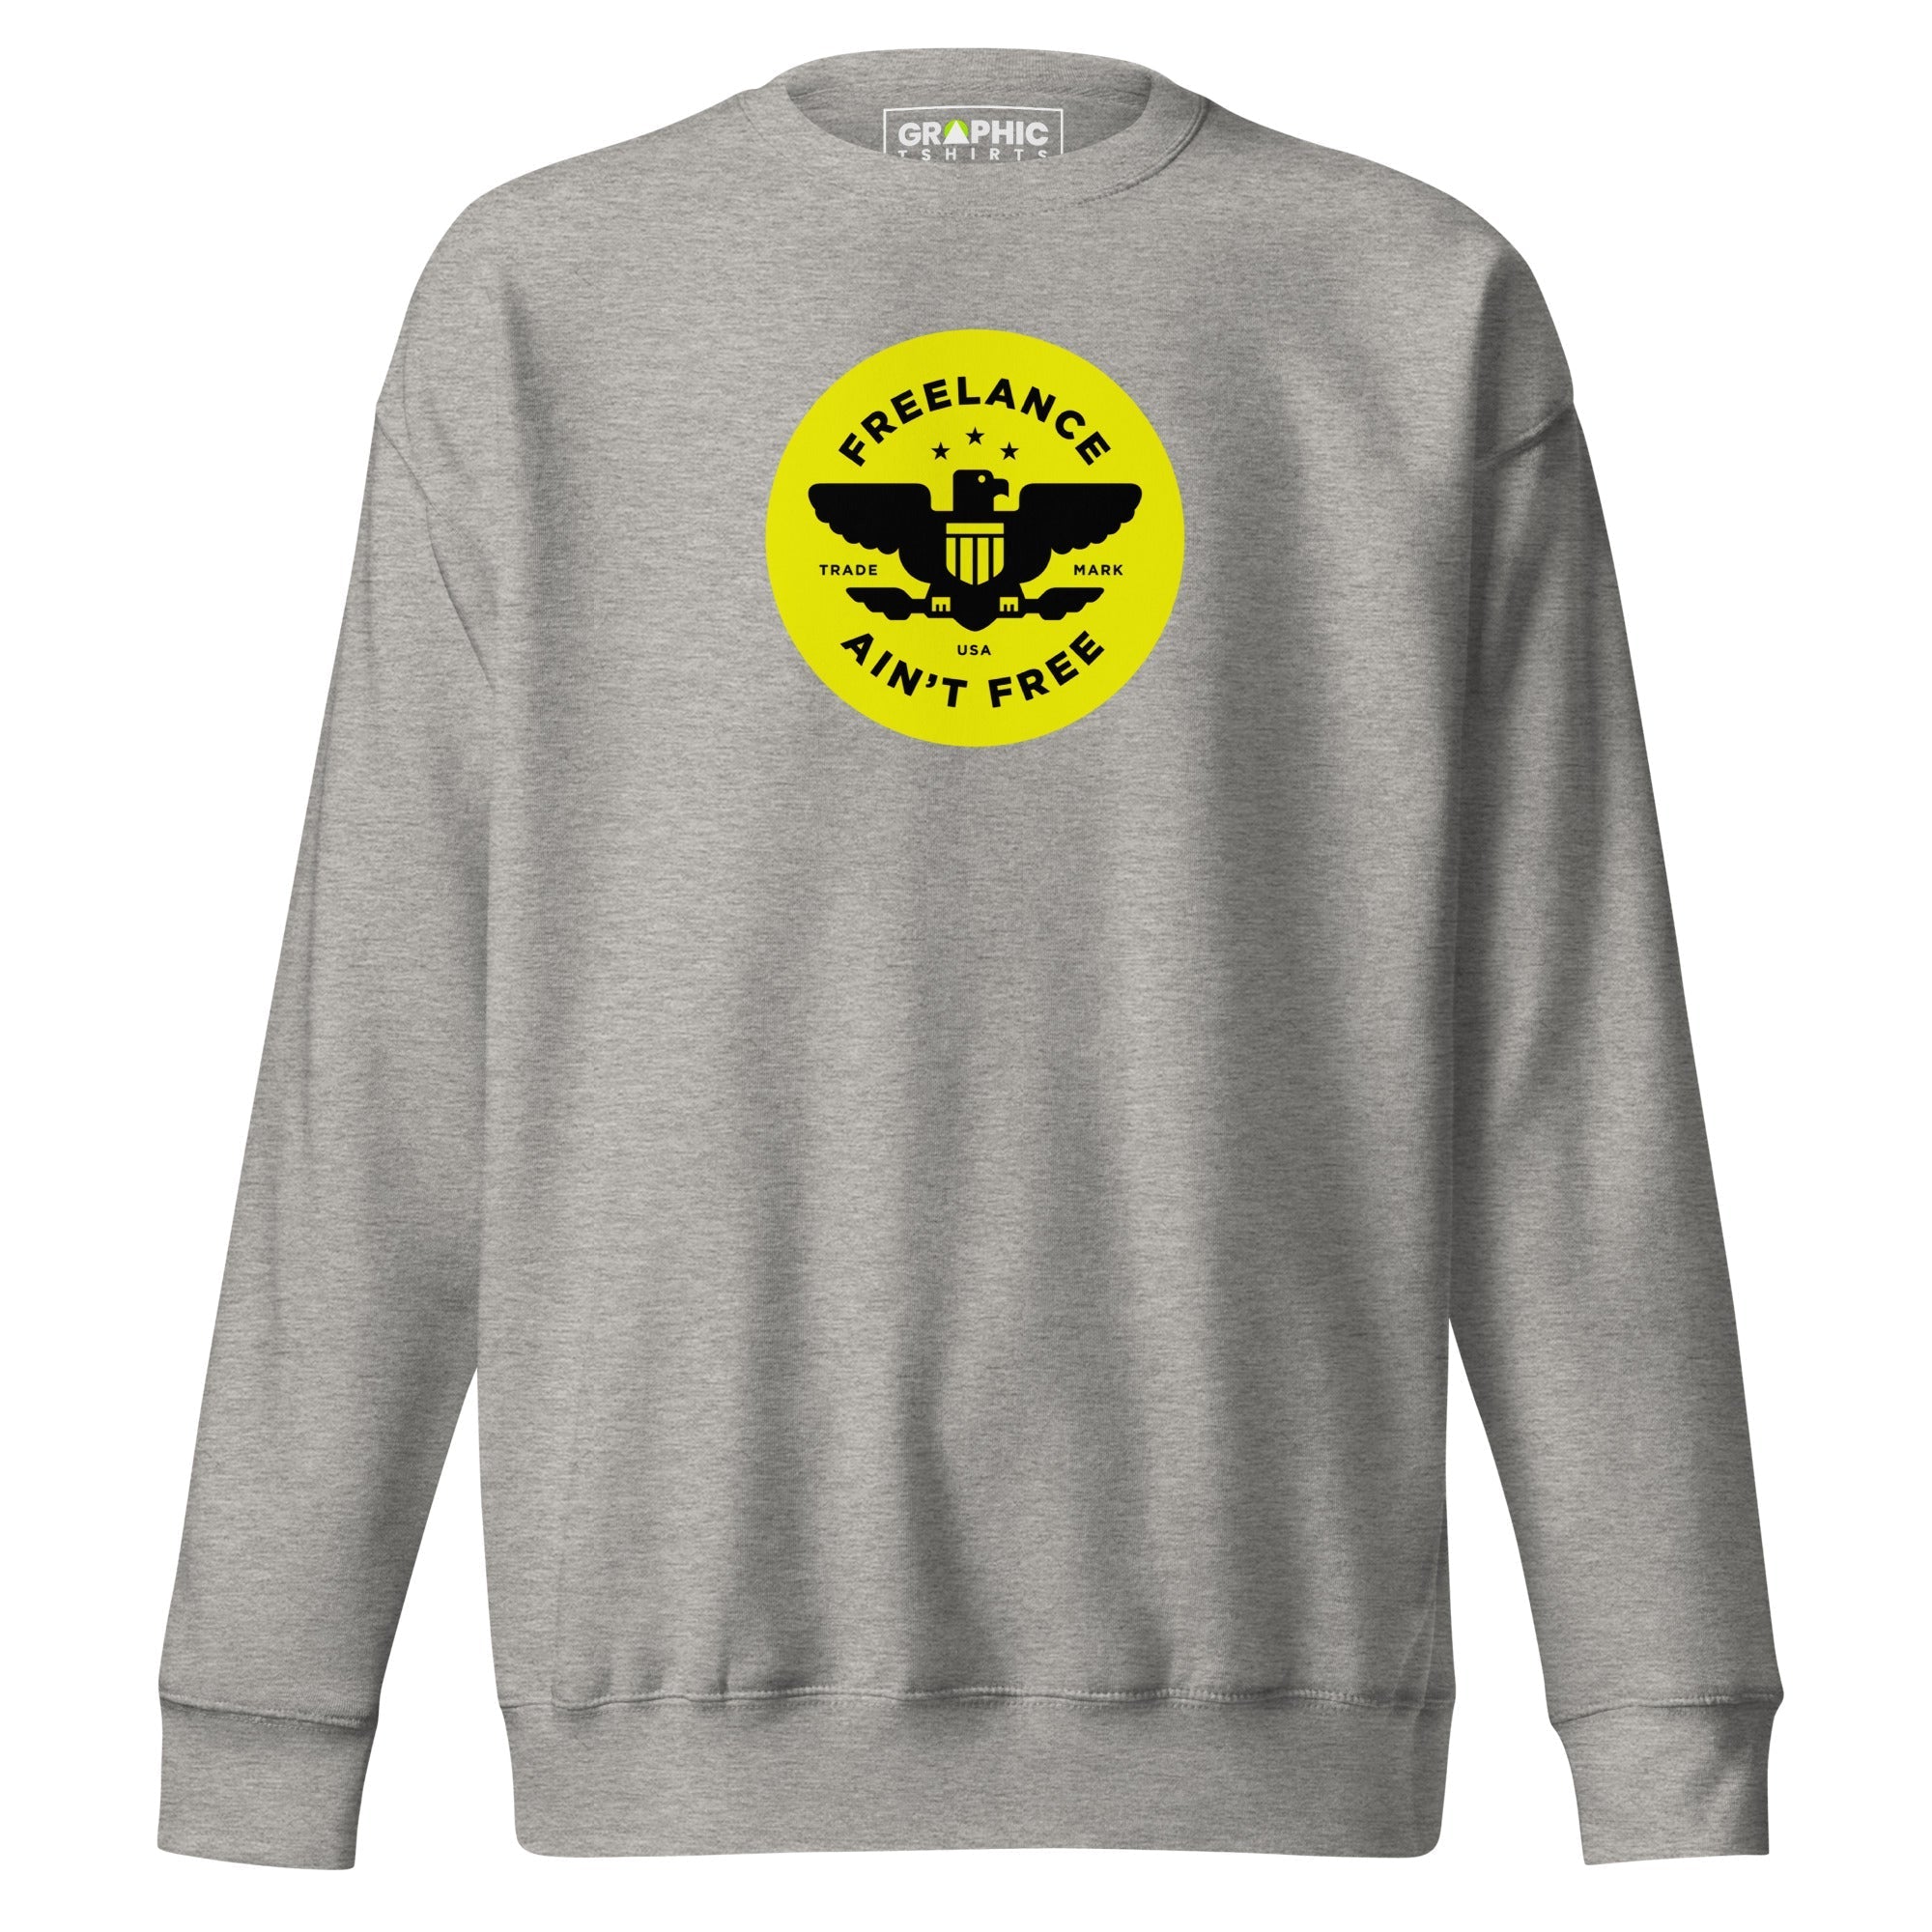 Unisex Premium Sweatshirt - Freelance Ain't Free - GRAPHIC T-SHIRTS